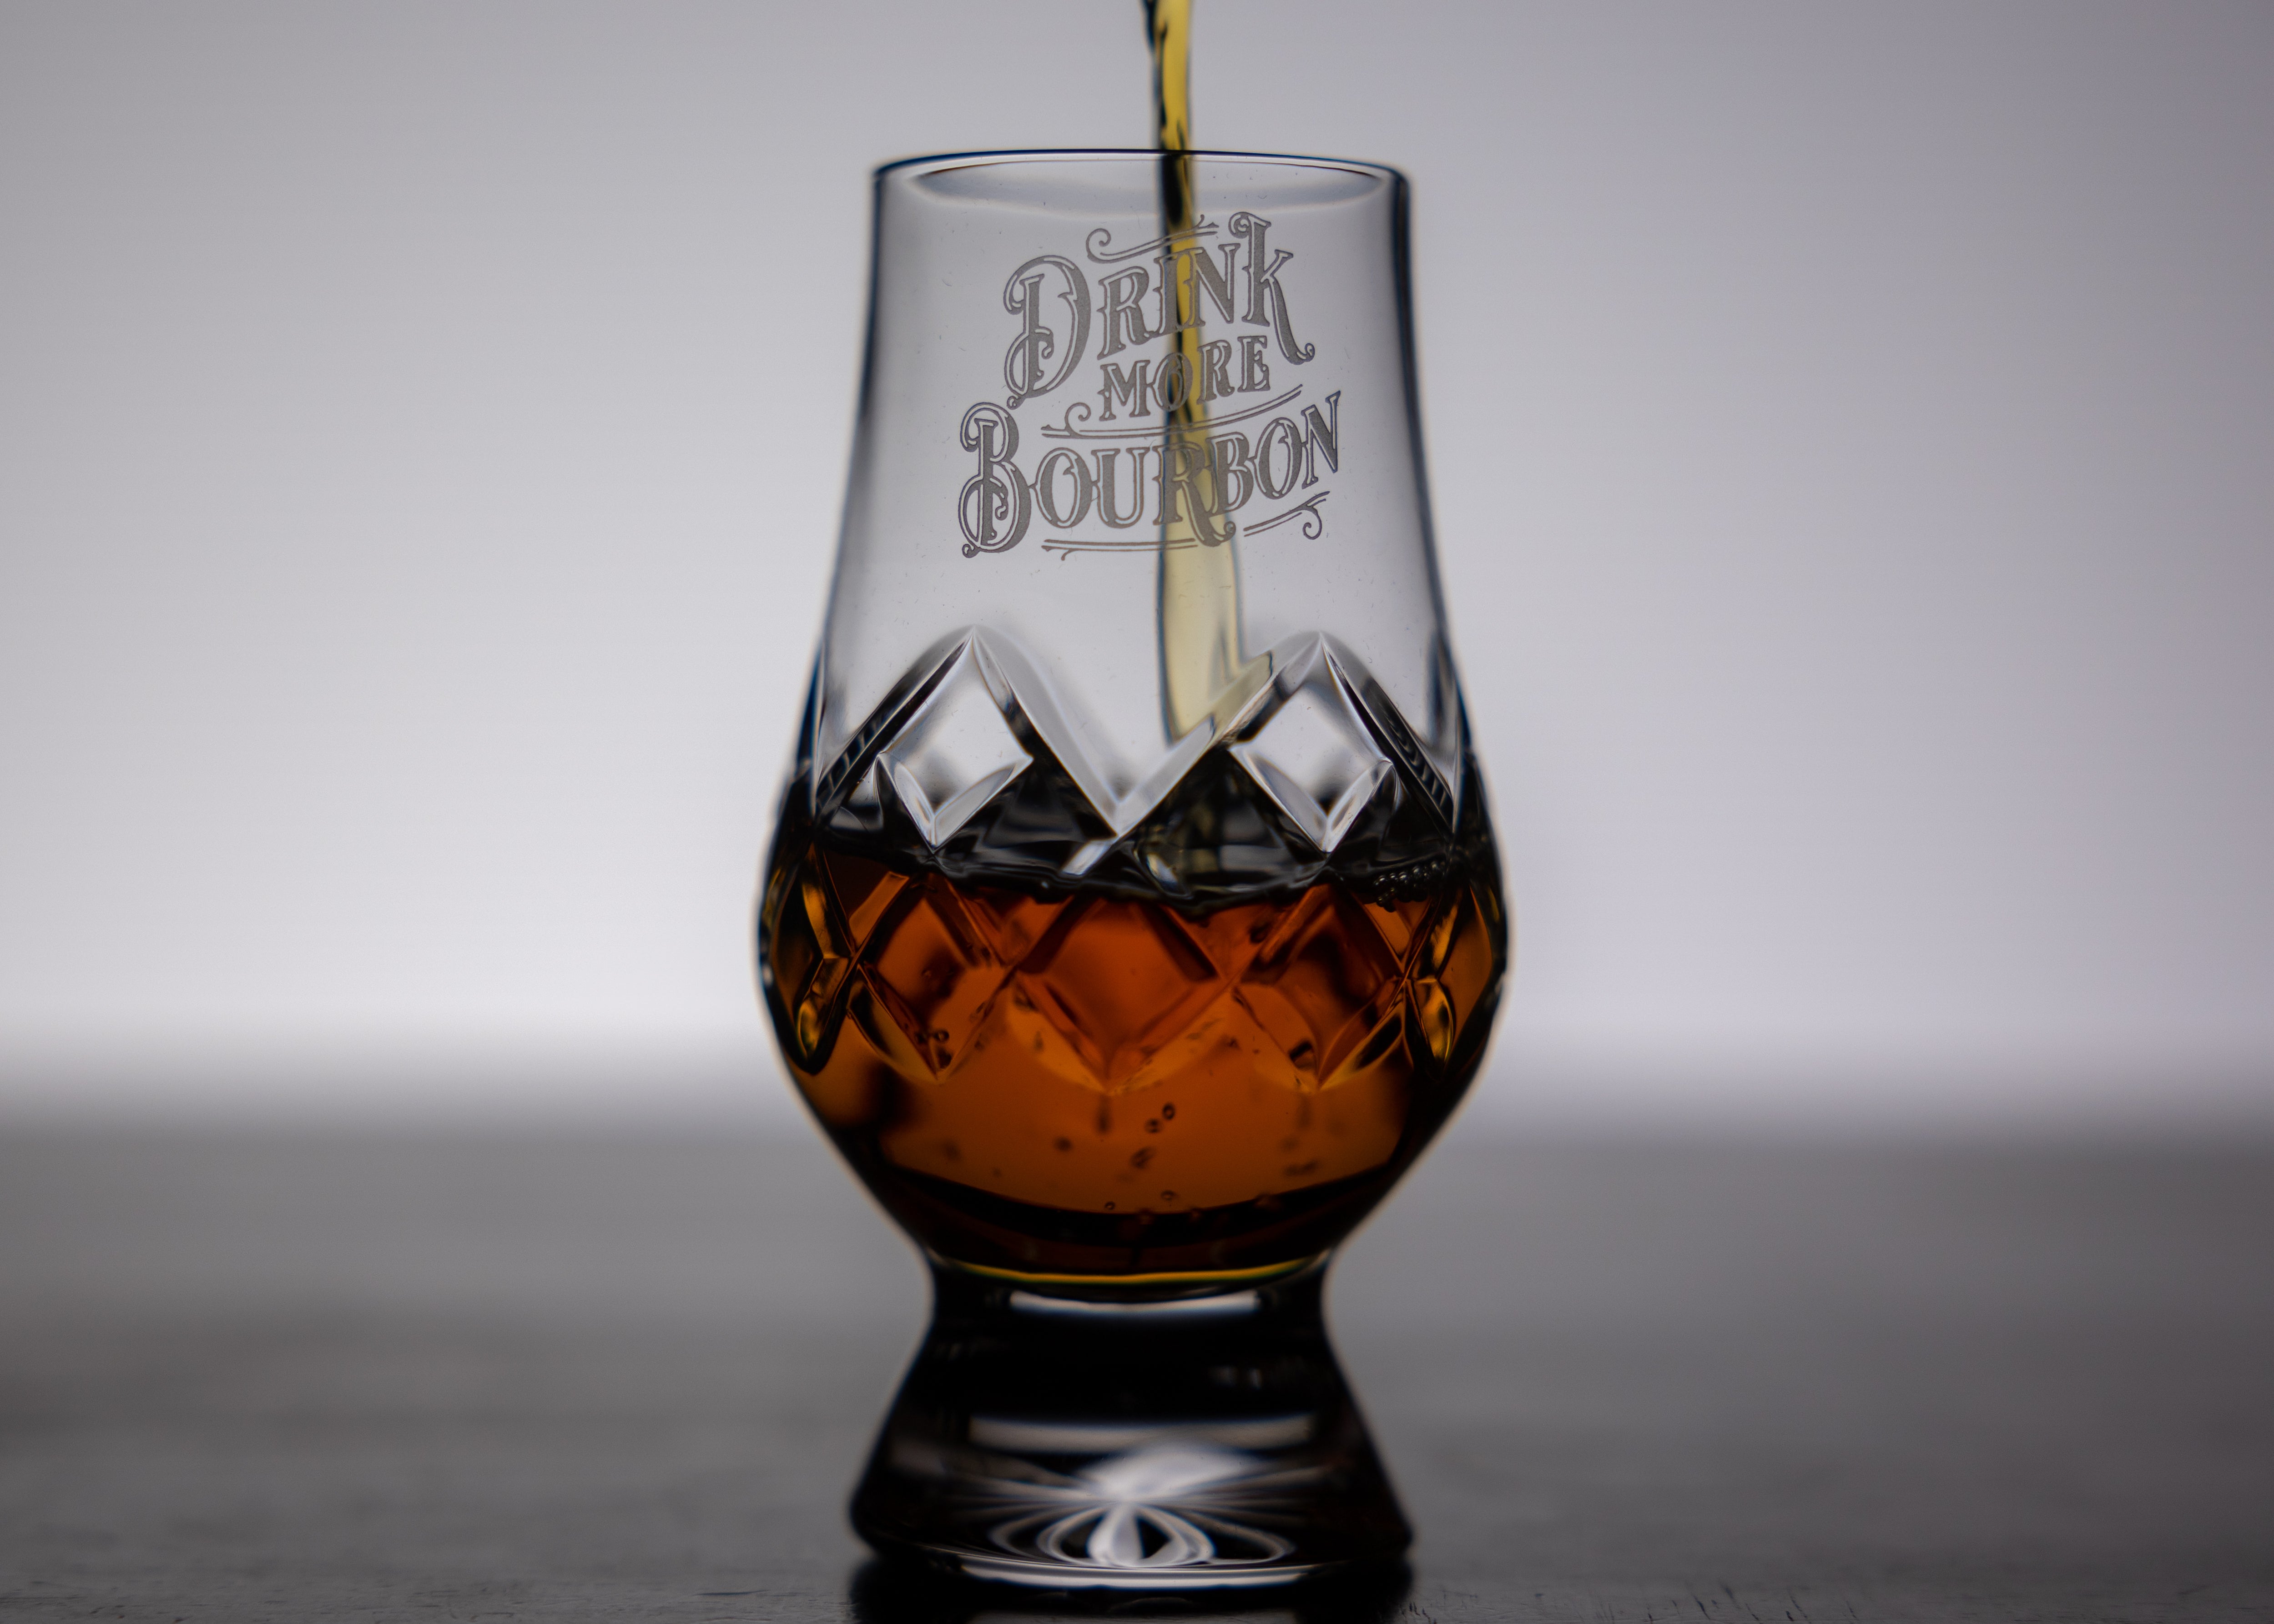 Drink More Bourbon Cut Crystal Glencairn